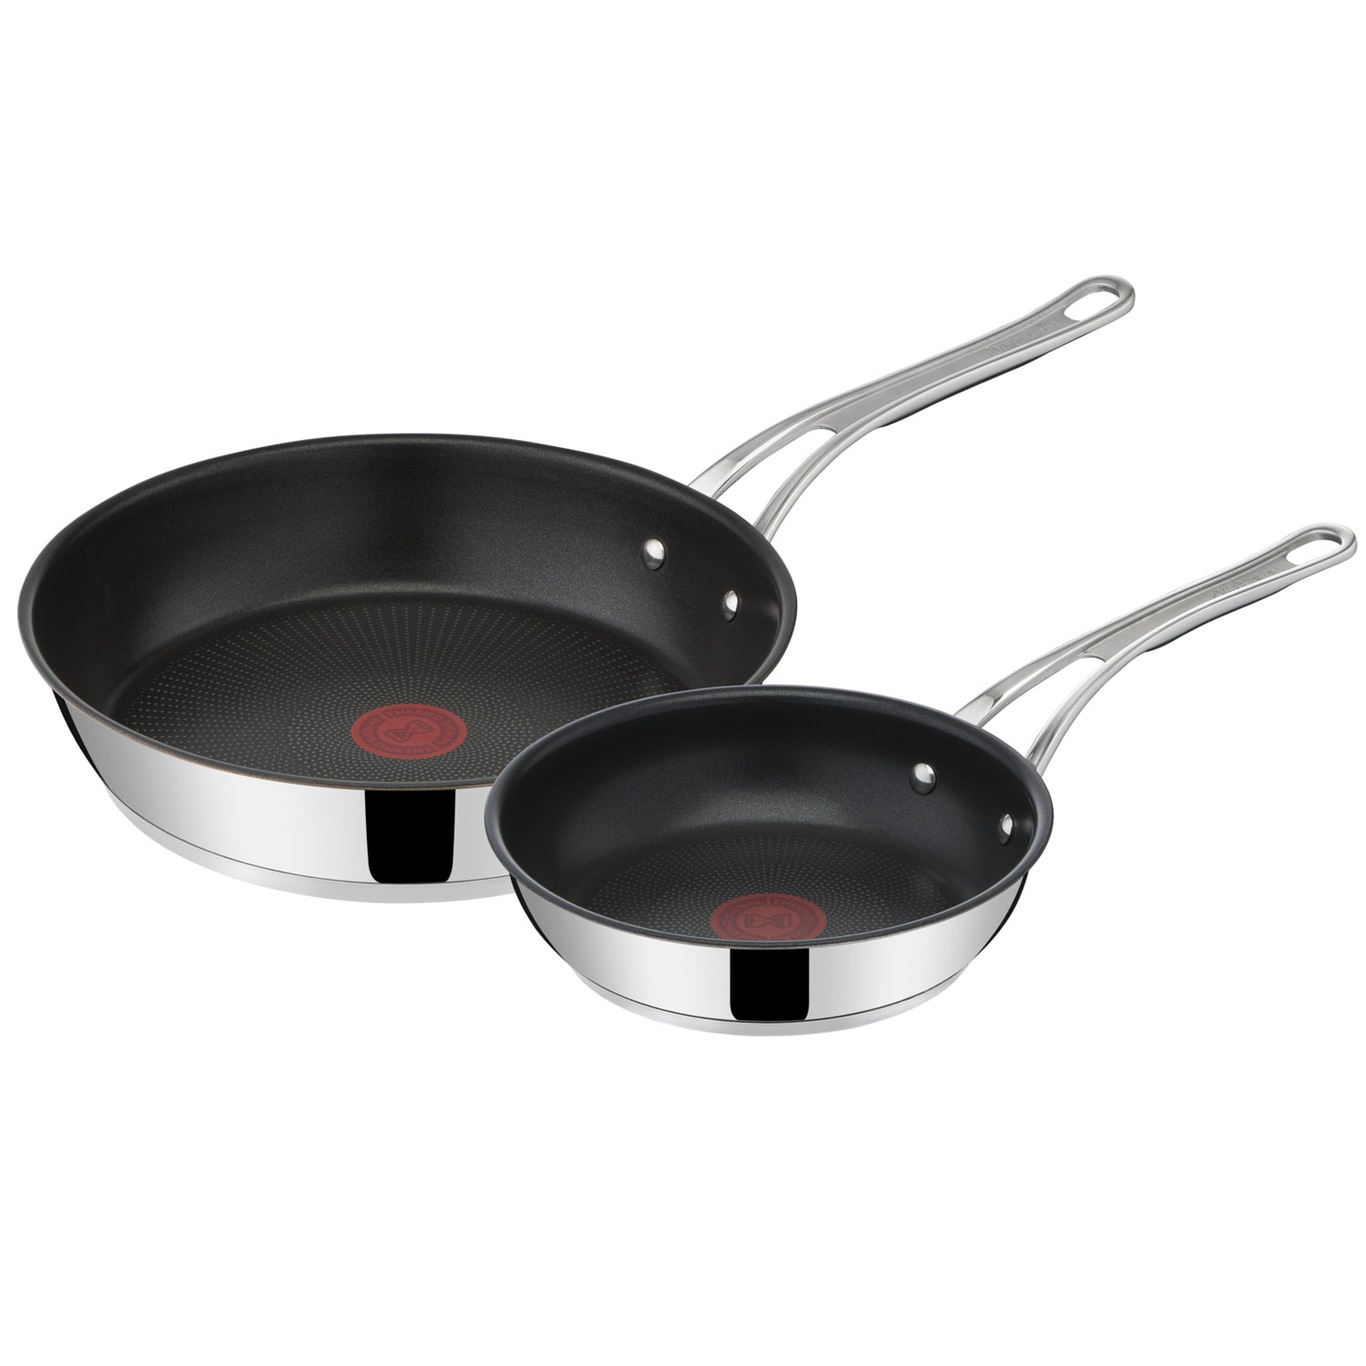 https://royaldesign.com/image/2/tefal-jamie-oliver-cooks-classic-frying-pans-set-28-cm-20-cm-0?w=800&quality=80